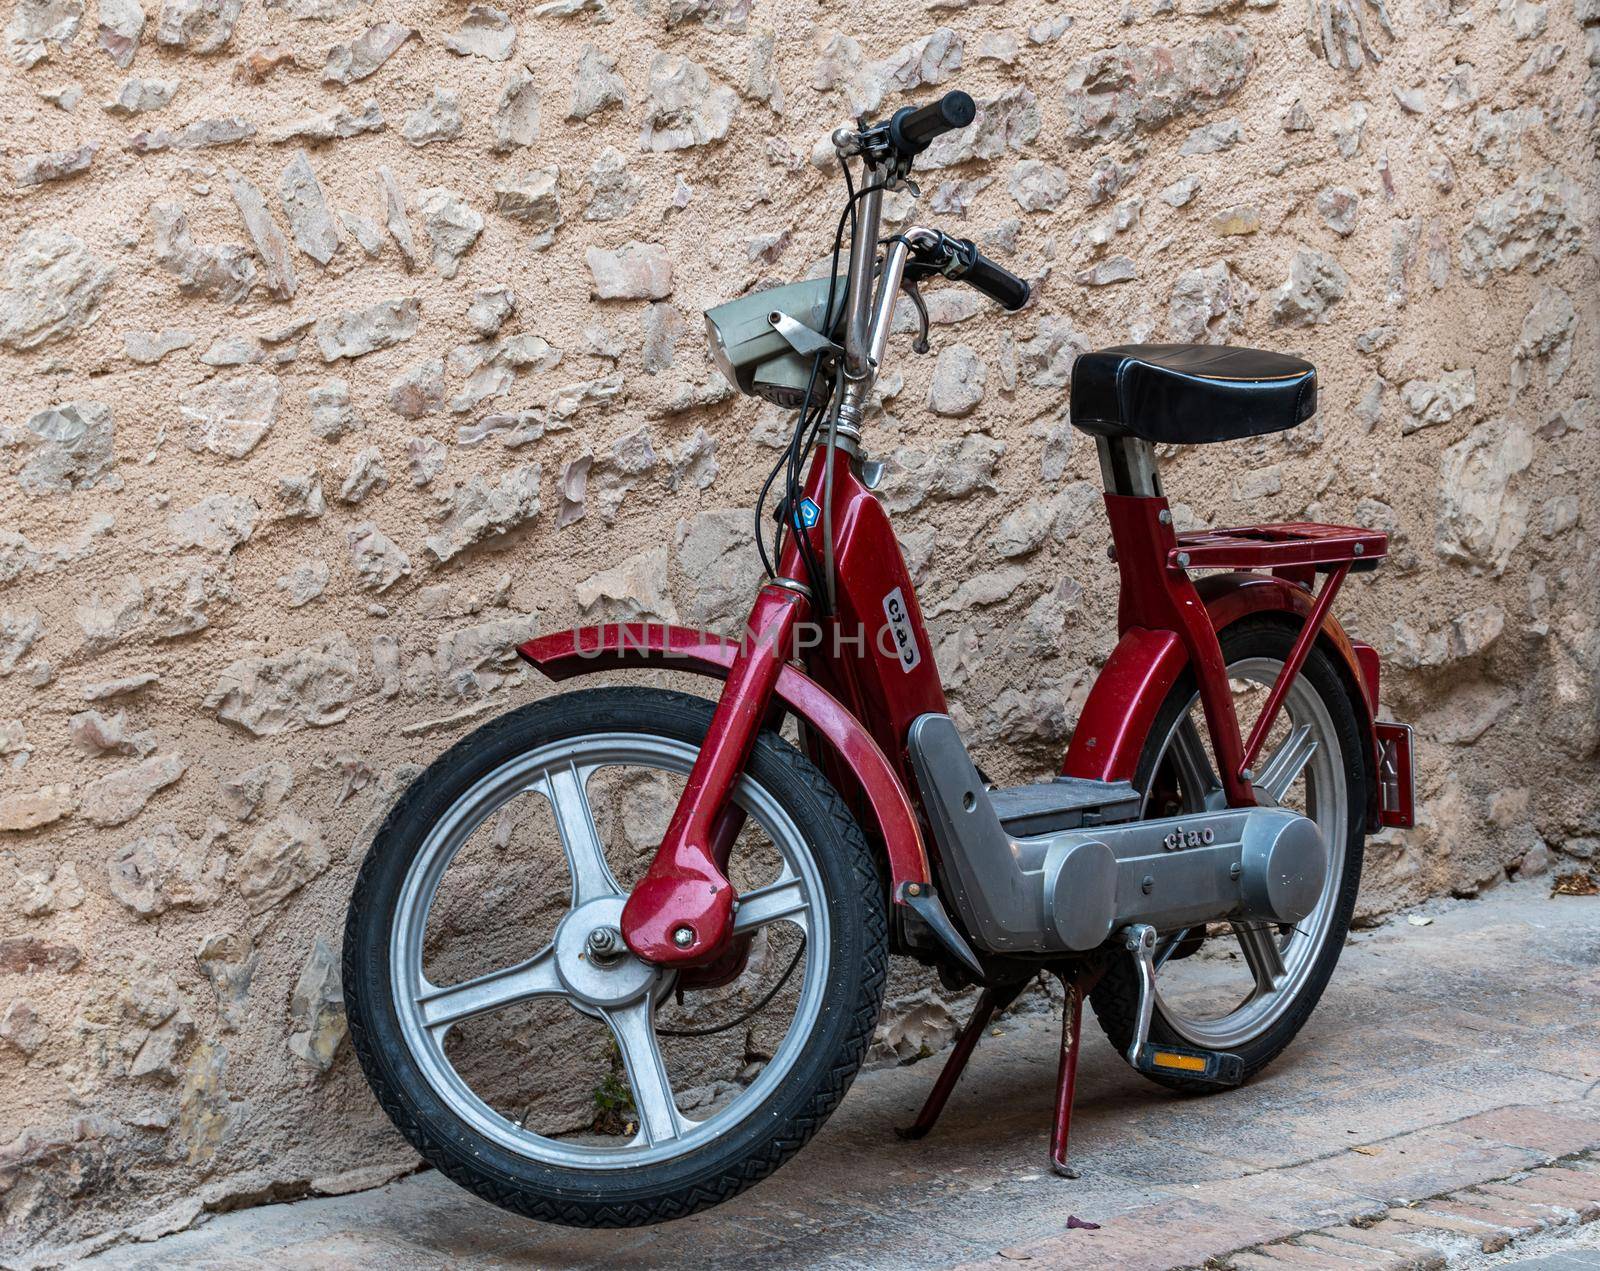 spello,italy august 21 2020:vintage piaggio scooter hi red color